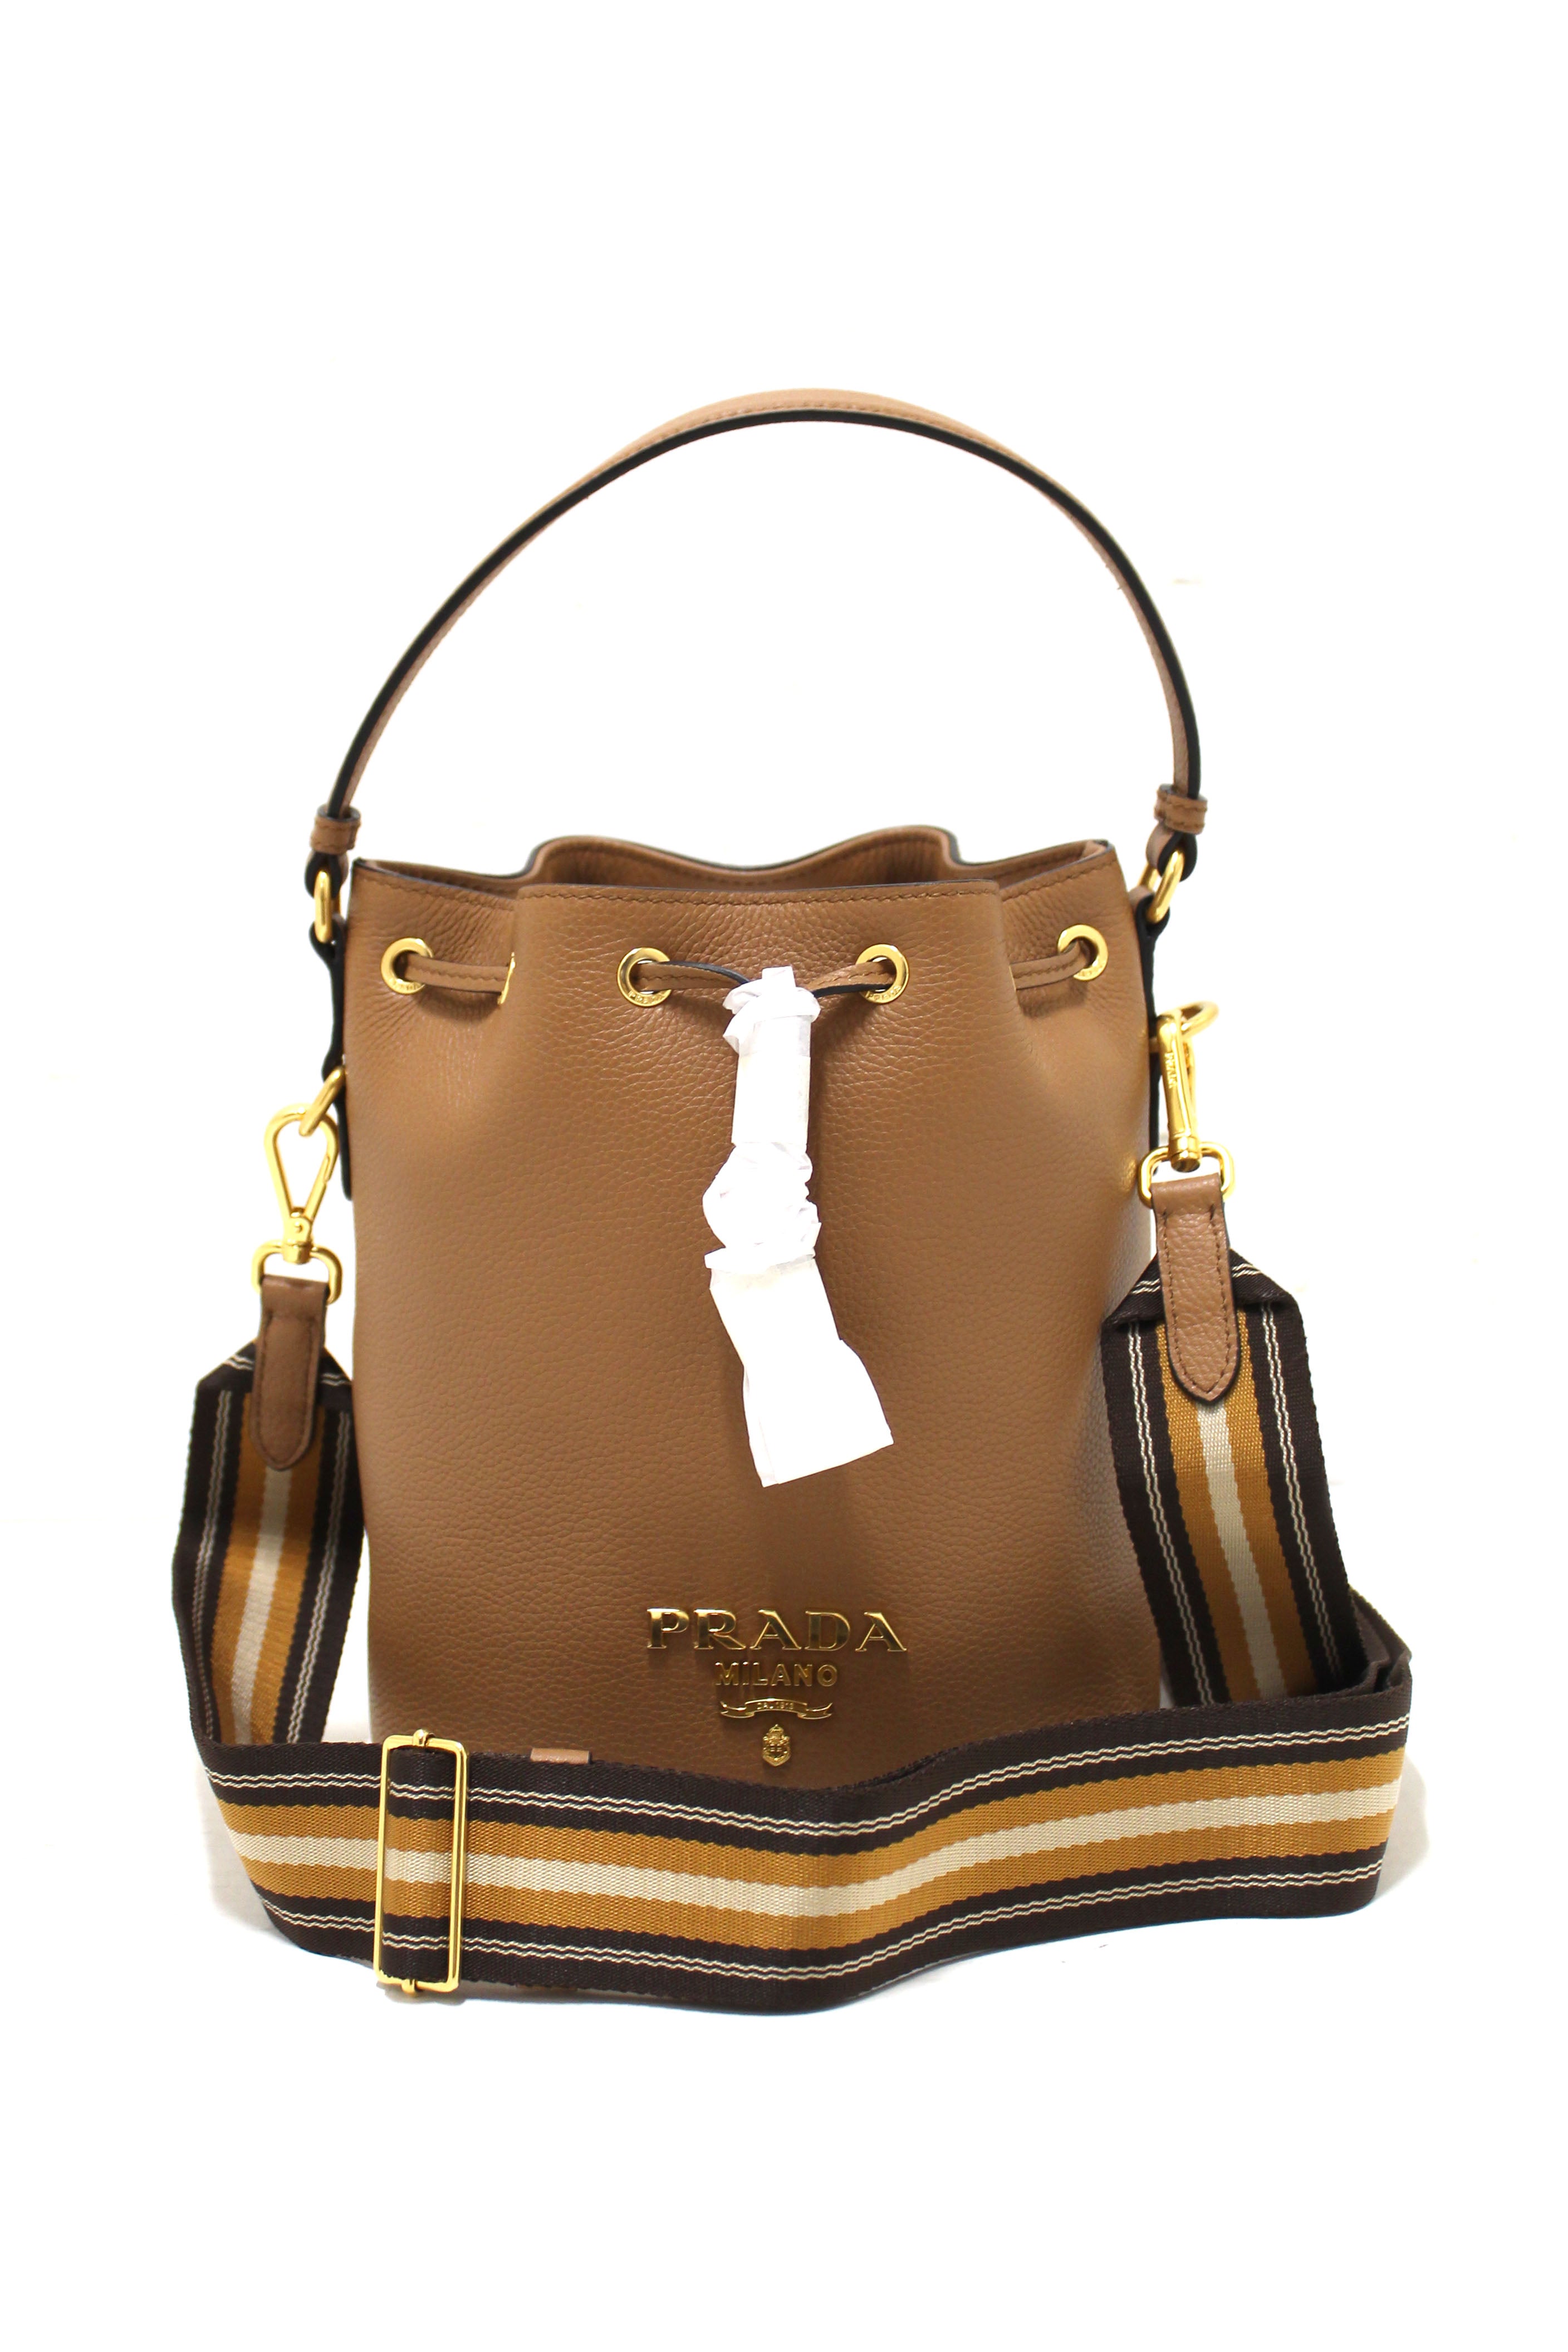 Prada Light Brown Leather Shoulder Bag Prada | TLC